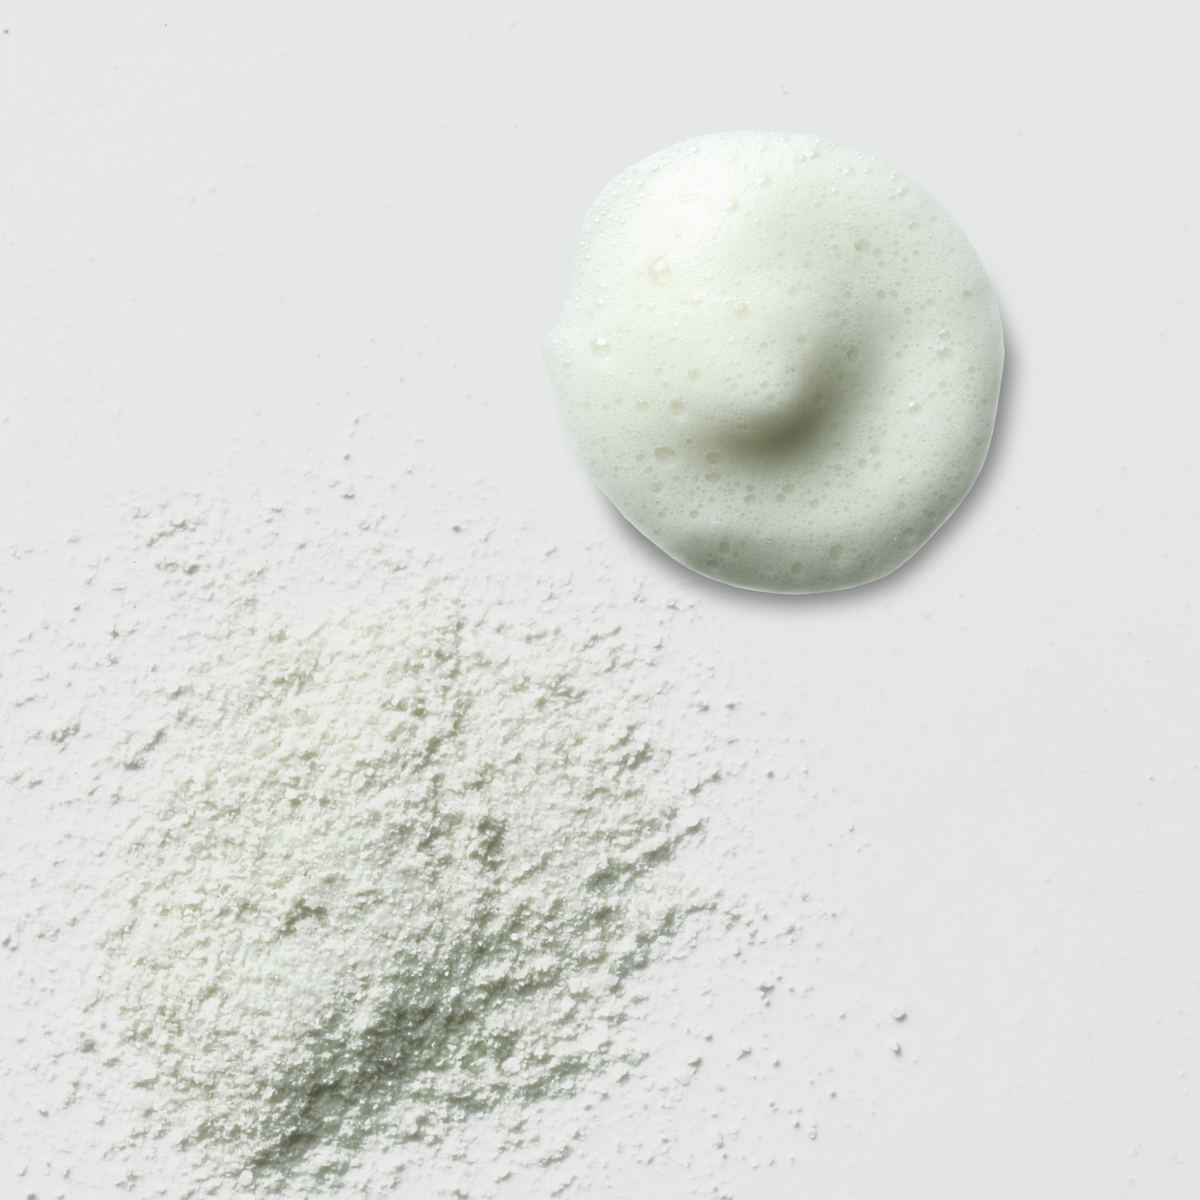 Pureté Greenwash Enzyme Cleansing Powder with Organic Matcha